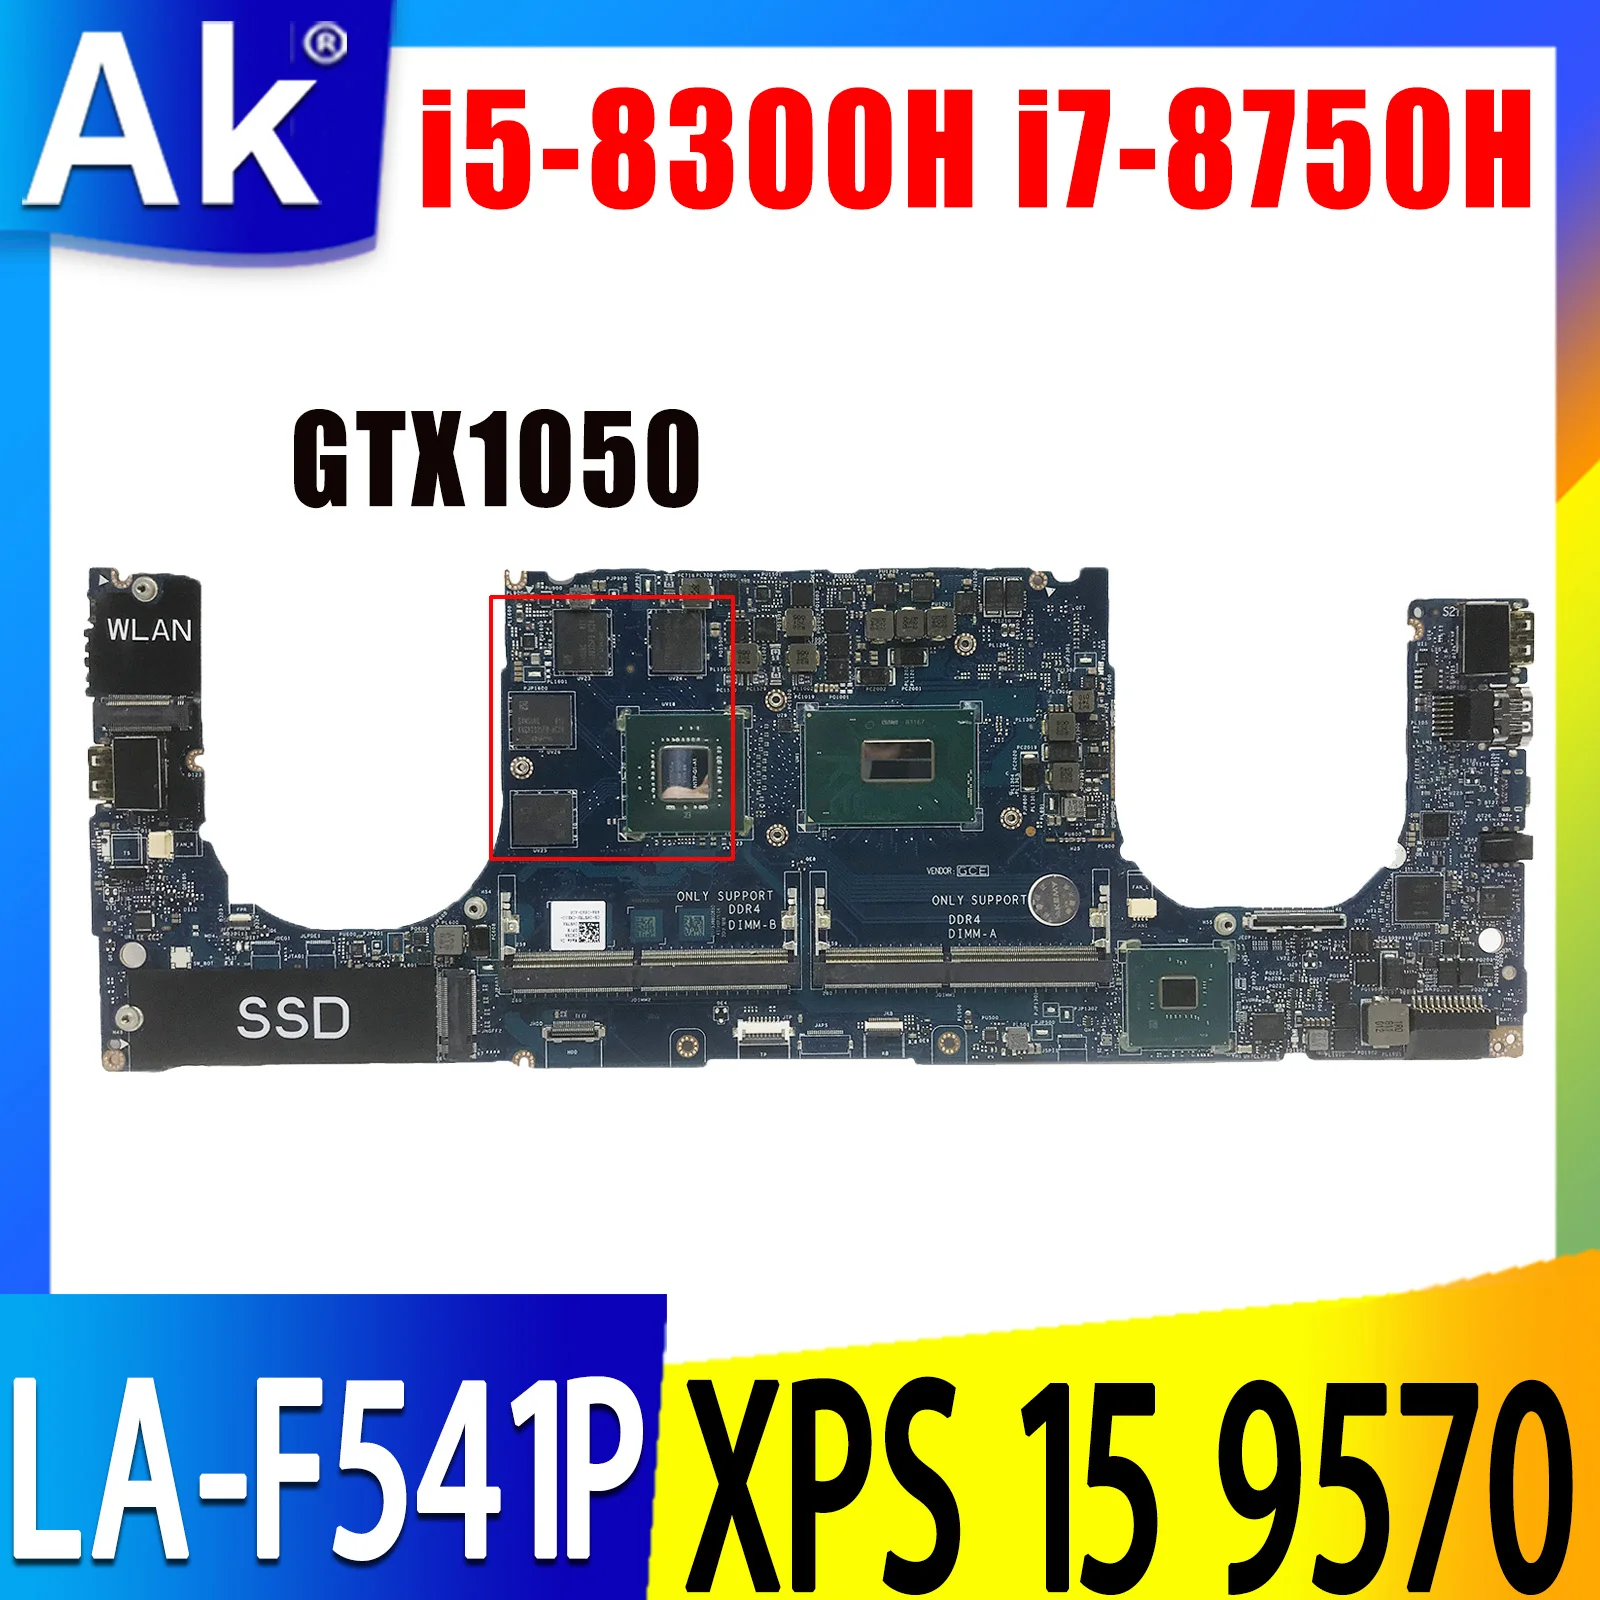 Для DELL XPS 15 9570, материнская плата для ноутбука, CN-0YYW9X с CN-0YWFR1 i7-8750H, CPU LA-F541P GTX1050 GPU